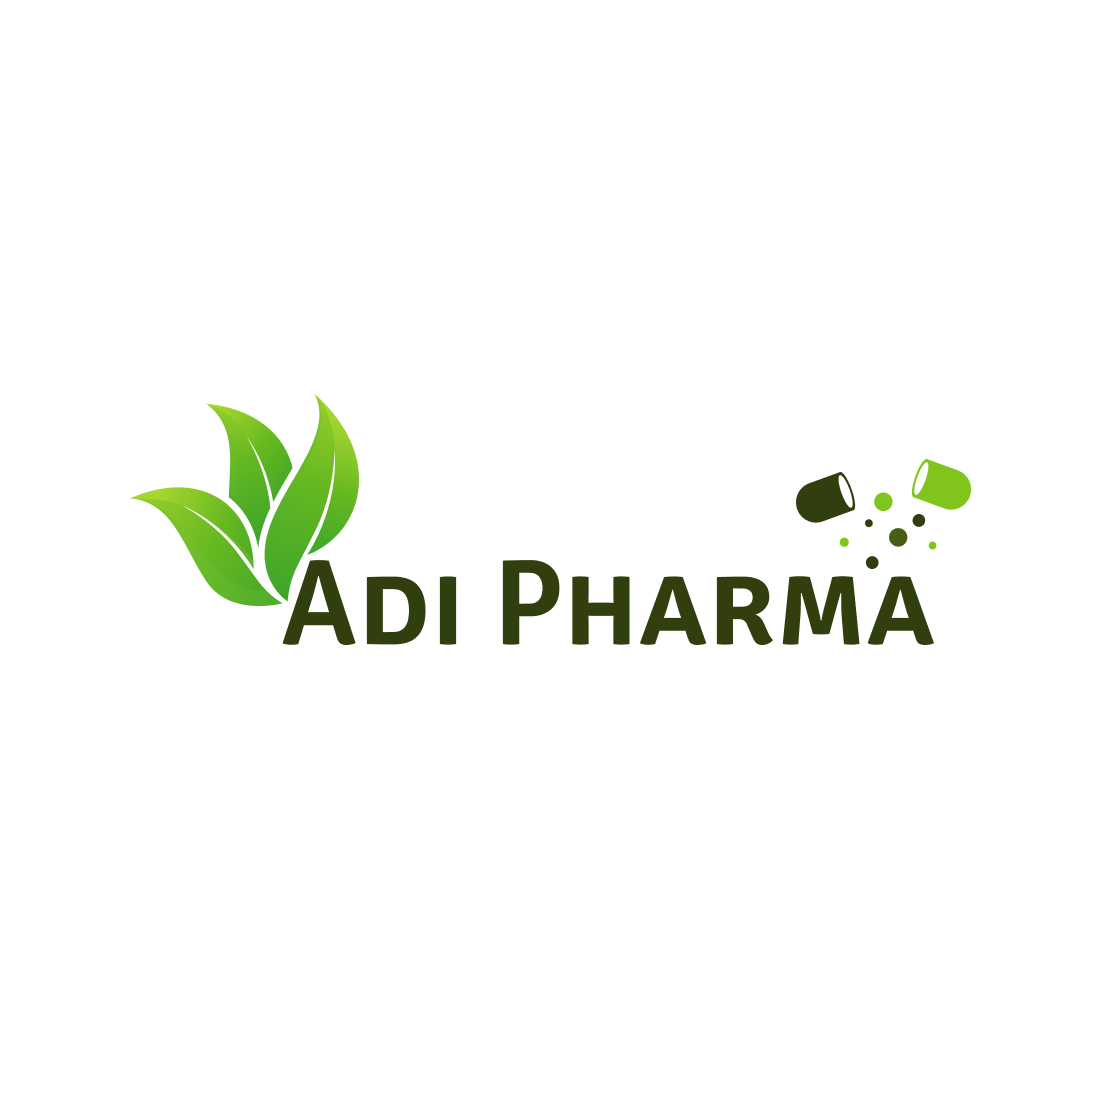 Adi Pharma Logo for 11$ preview image.